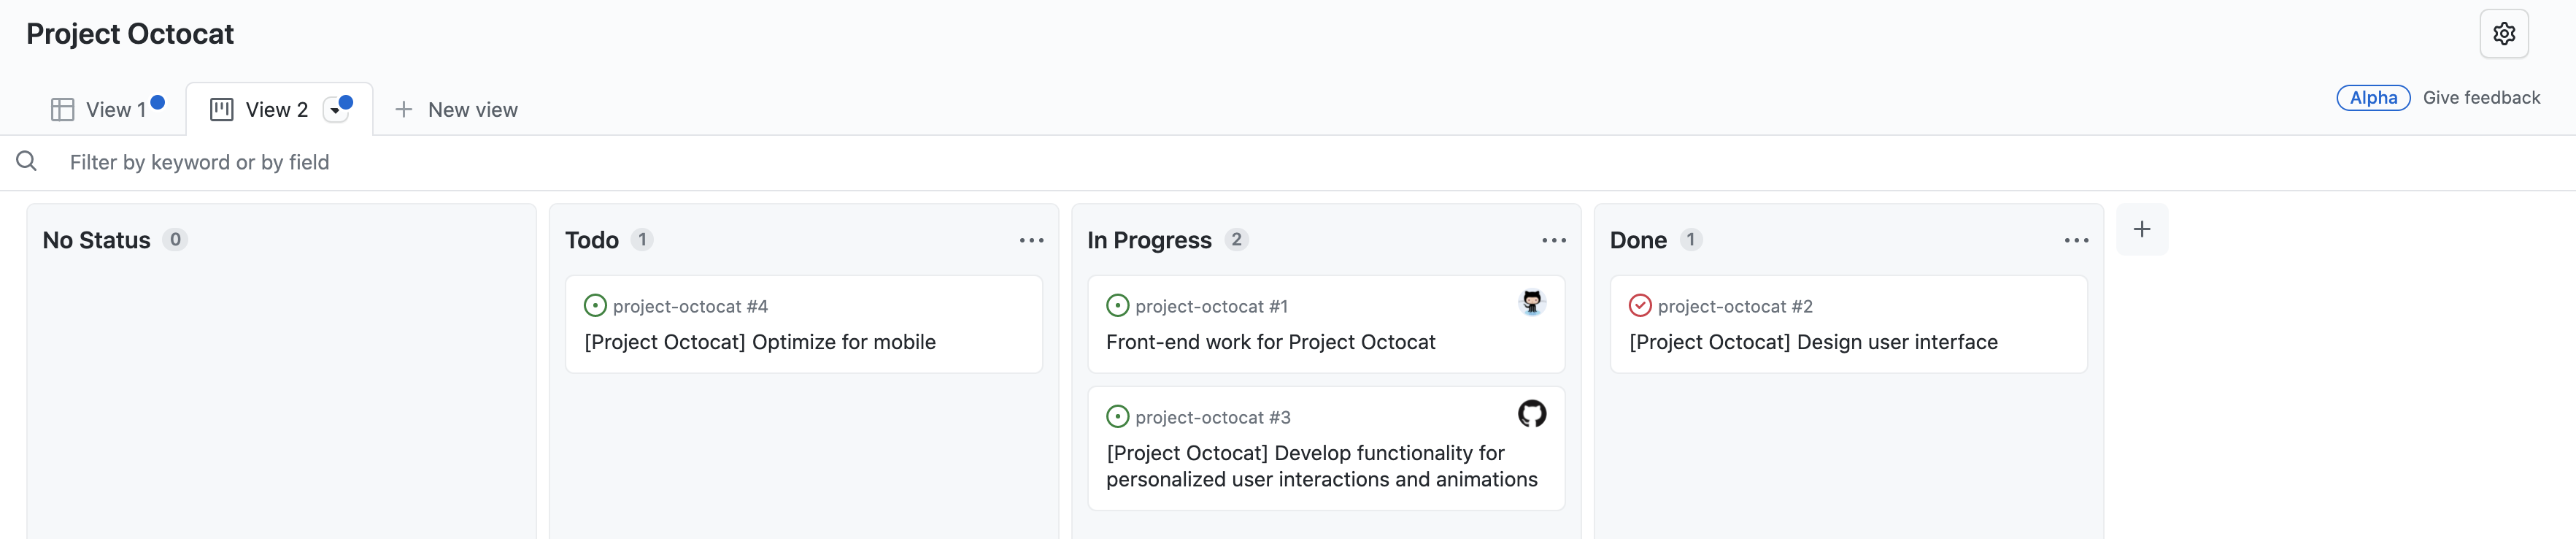 “Octocat 项目”项目的板视图的屏幕截图，该视图将各项议题分入“无状态”、“待办”、“正在进行”和“已完成”列。